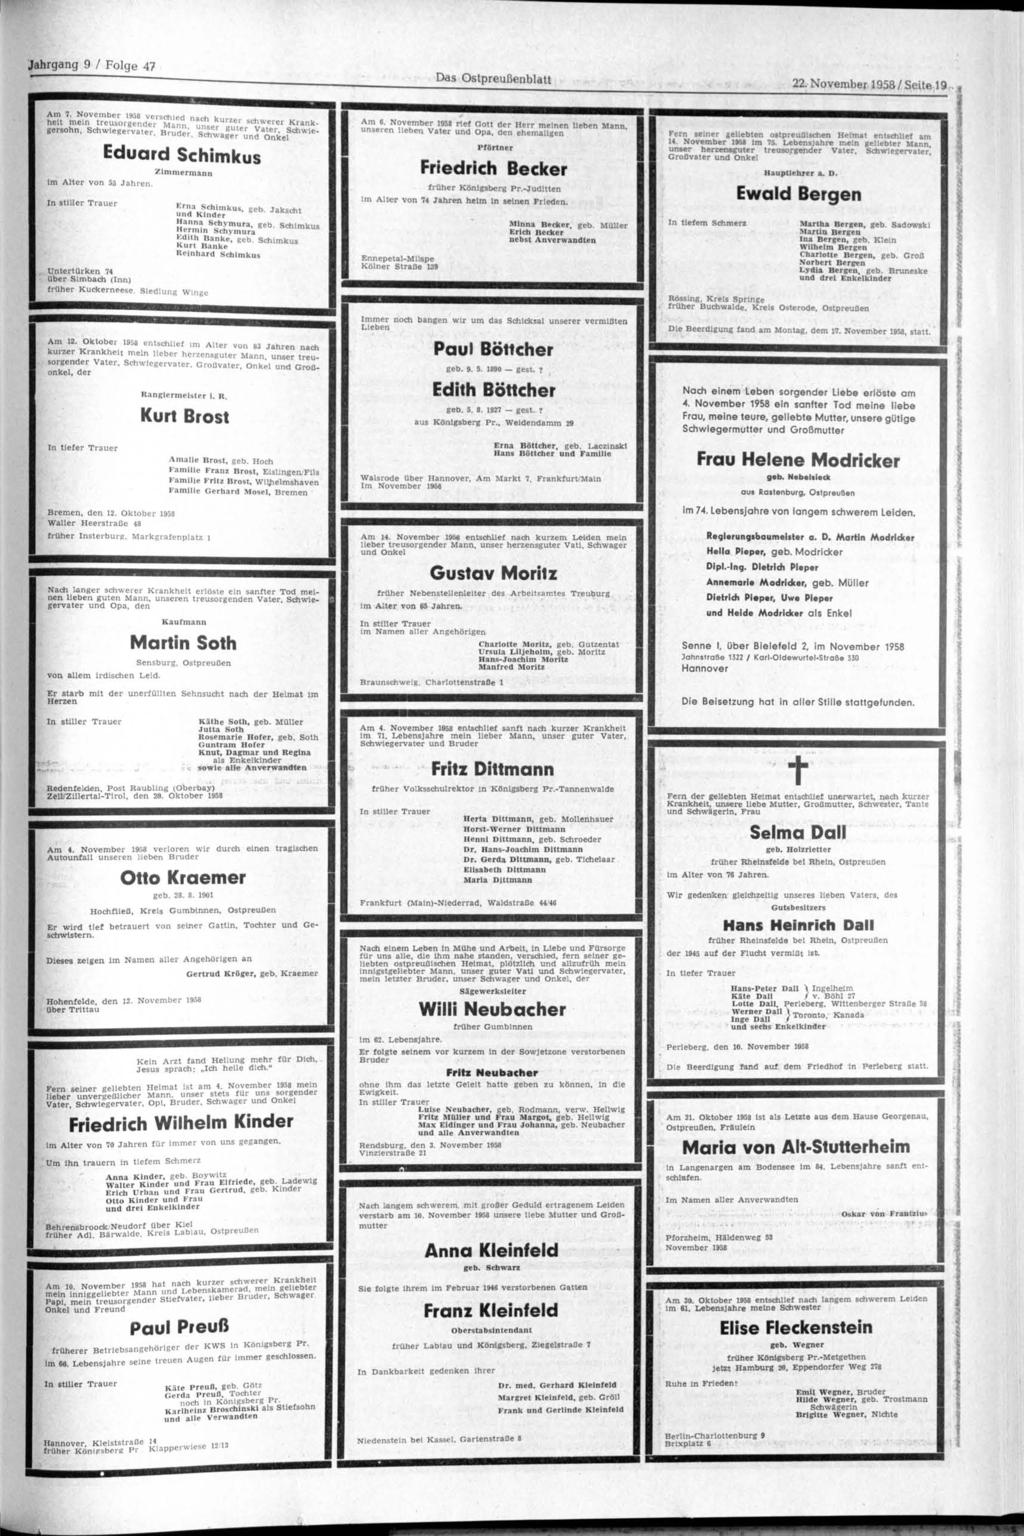 Jahrgang 9 / Folge 47 Das Ostpreußenblatt 22. November 1958 / Seite 19. M V 6 r ^ t U n Ä ^werer Krank gersohn. Schwiegervater! BrSSSr.